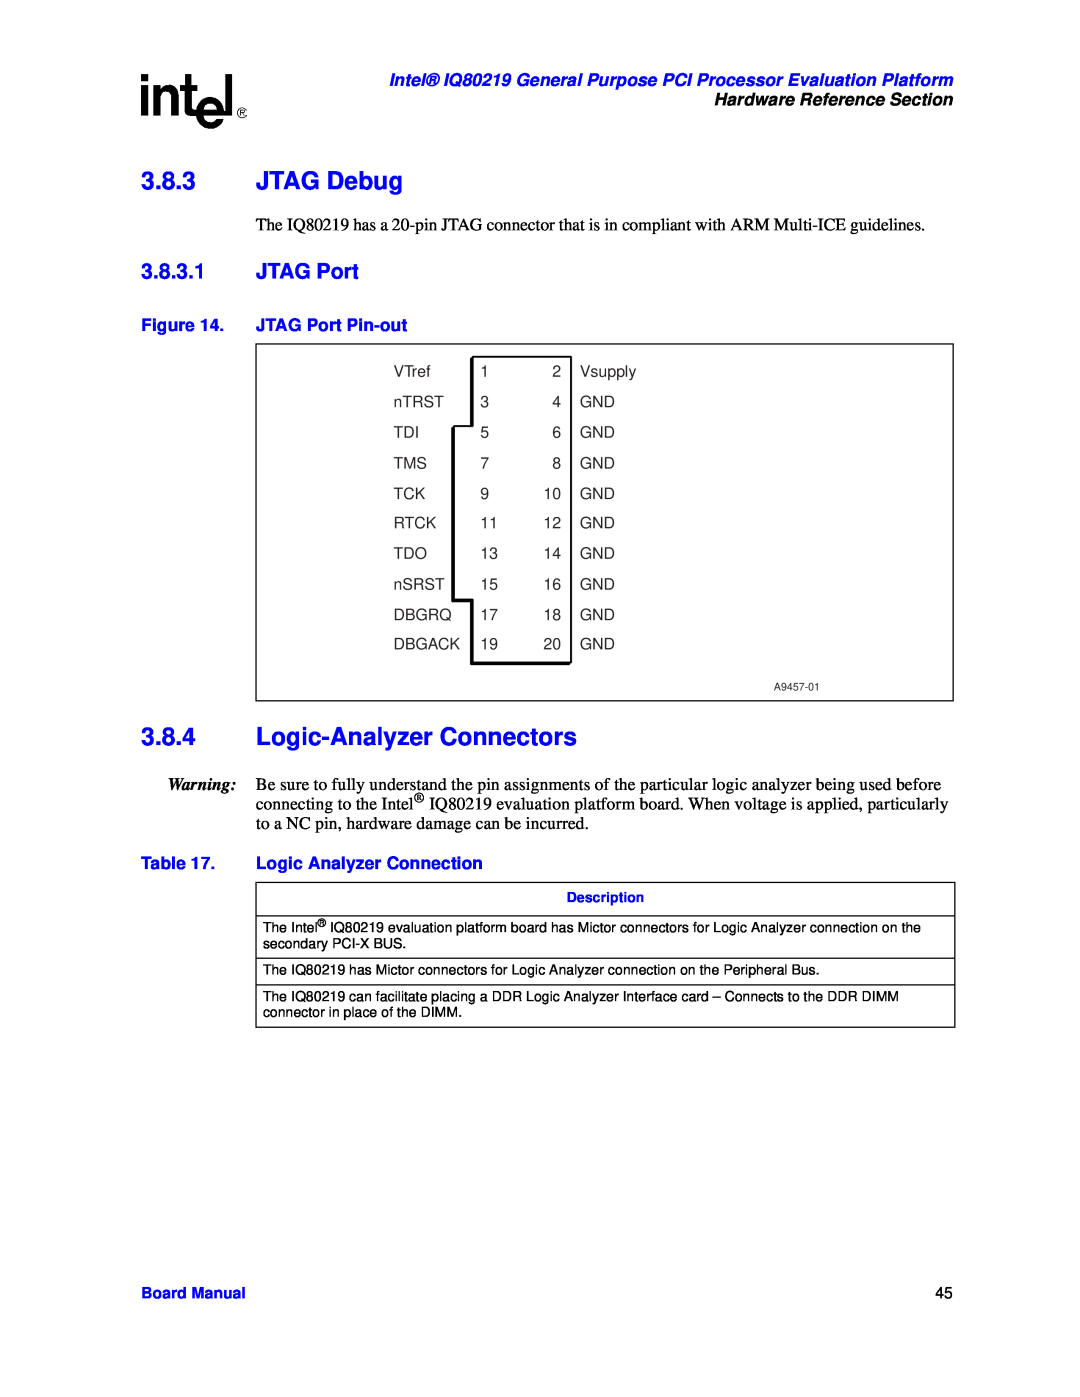 Intel IQ80219 manual JTAG Debug, Logic-Analyzer Connectors, 3.8.3.1, JTAG Port Pin-out, Logic Analyzer Connection 